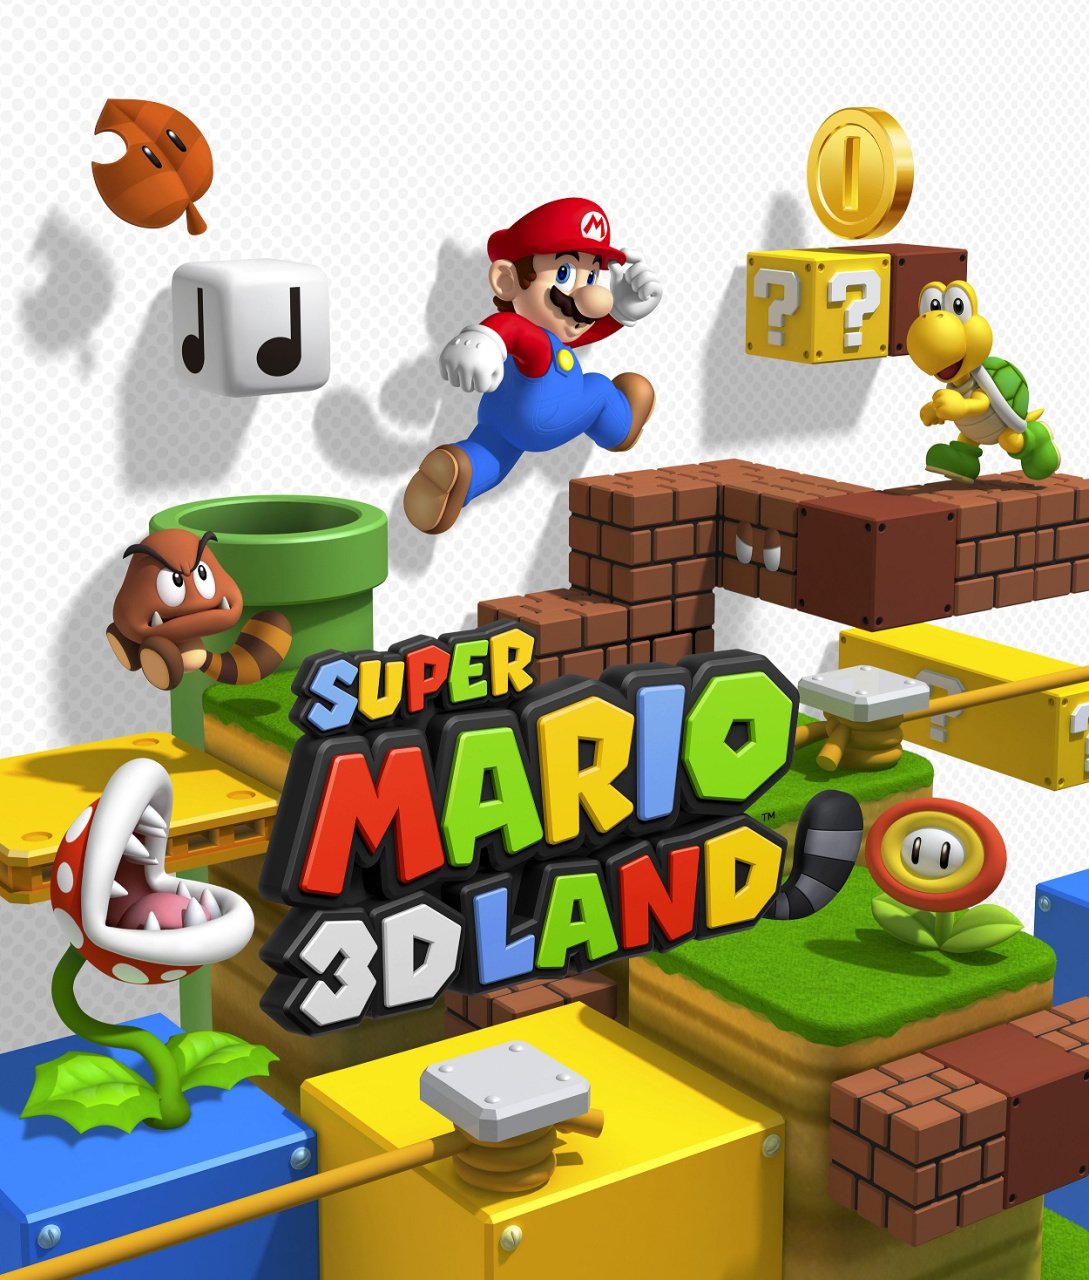 Super Mario 3d Land Münzen